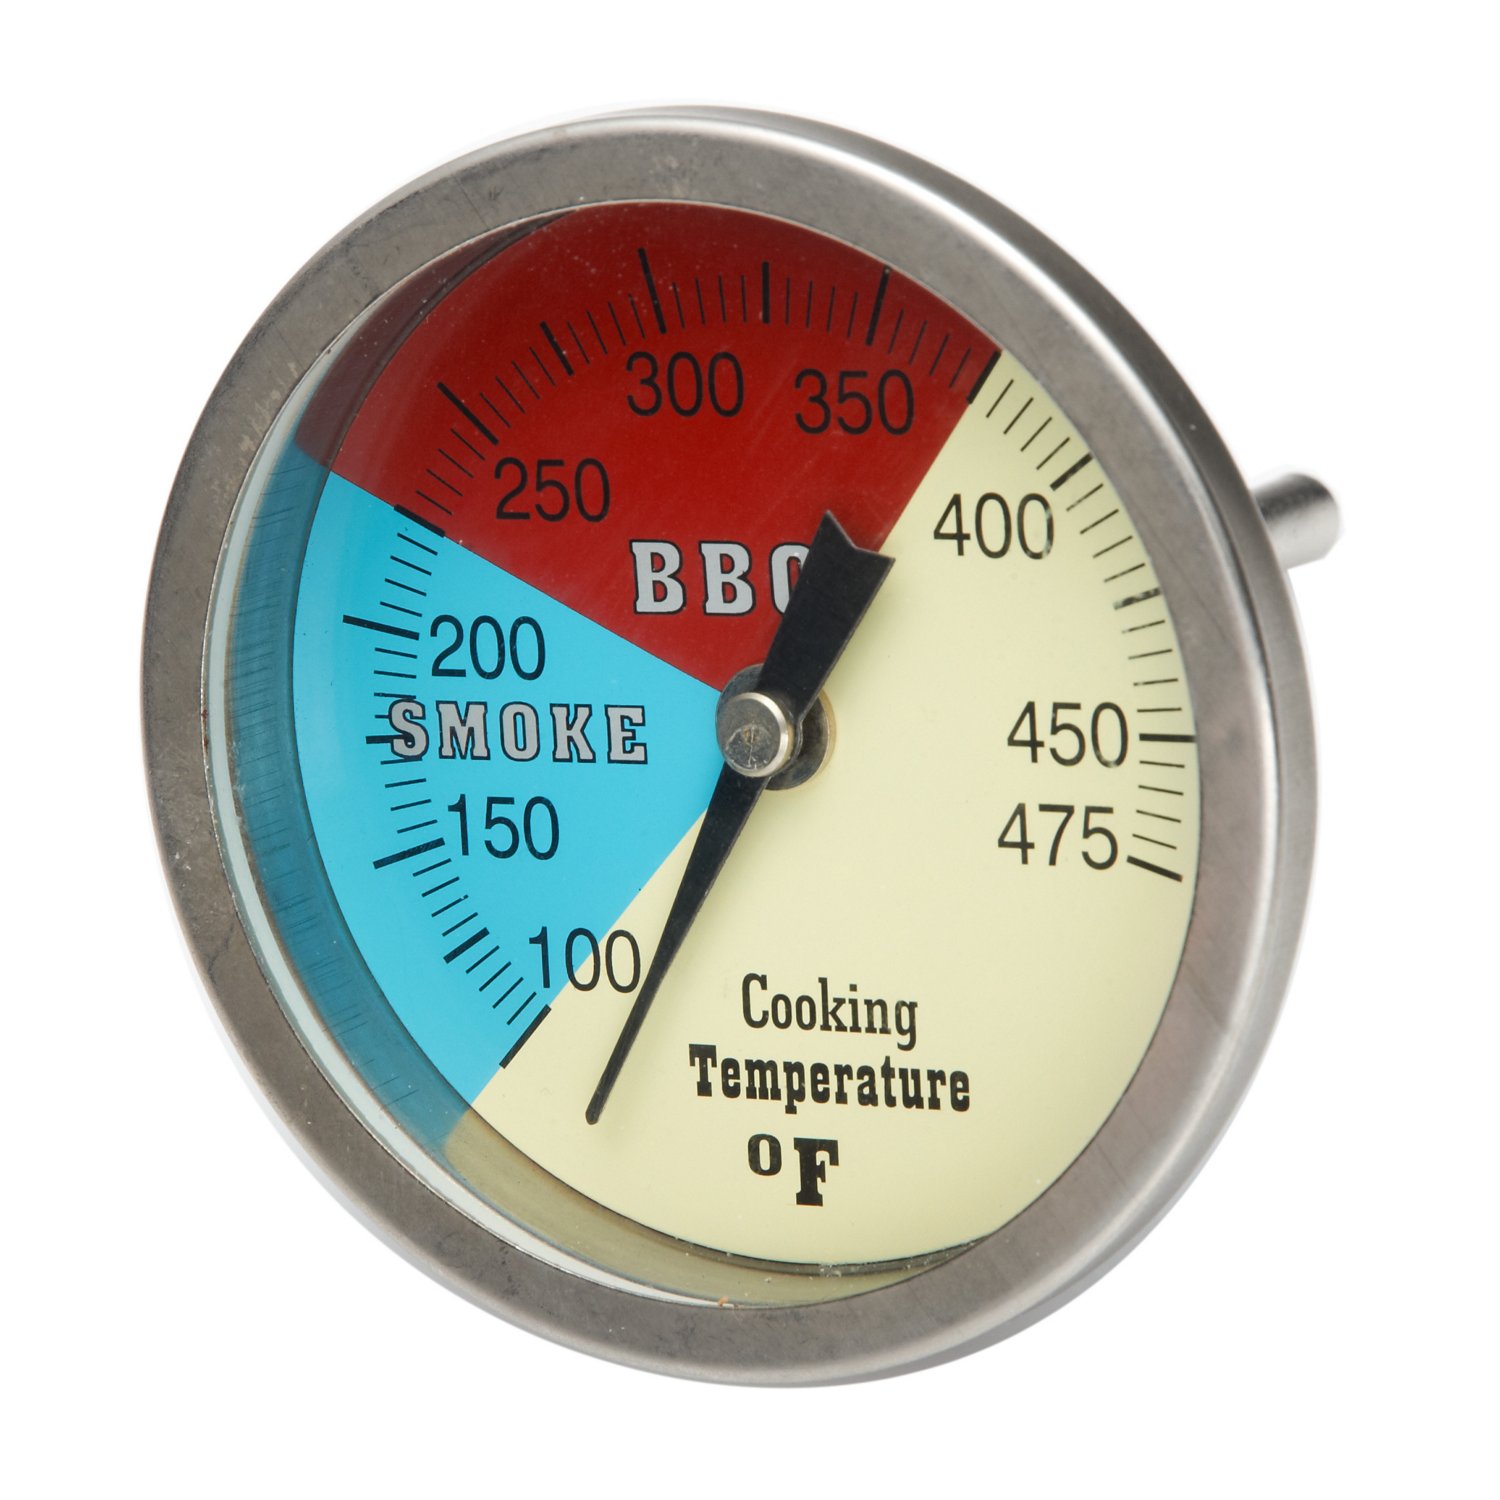 Bubba-Q BBQ Pit Smoker & Grill Temperature Gauge